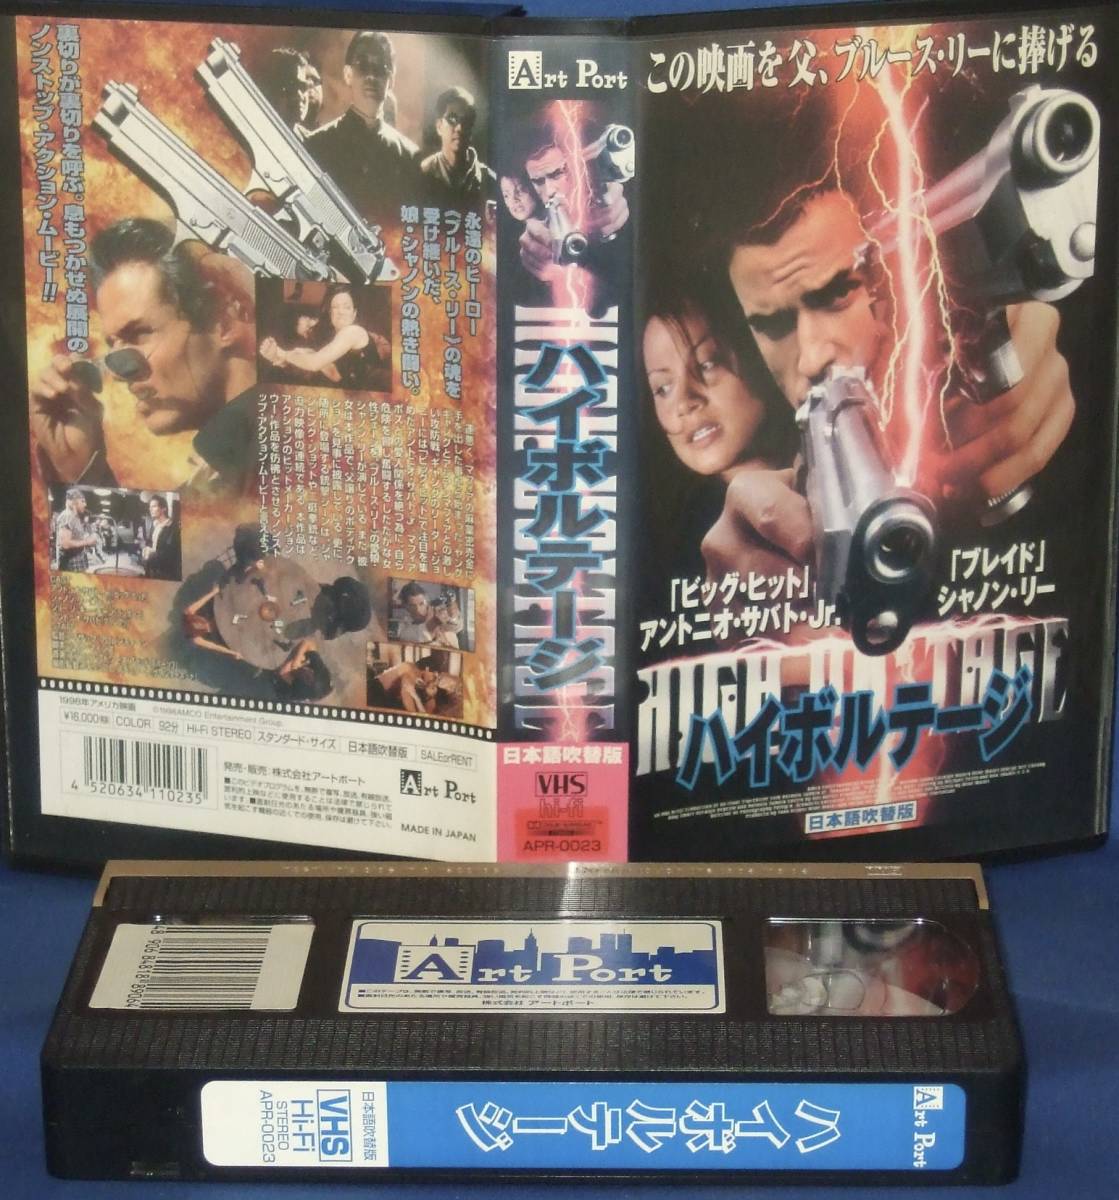  high voltage [ Japanese blow change ][VHS]